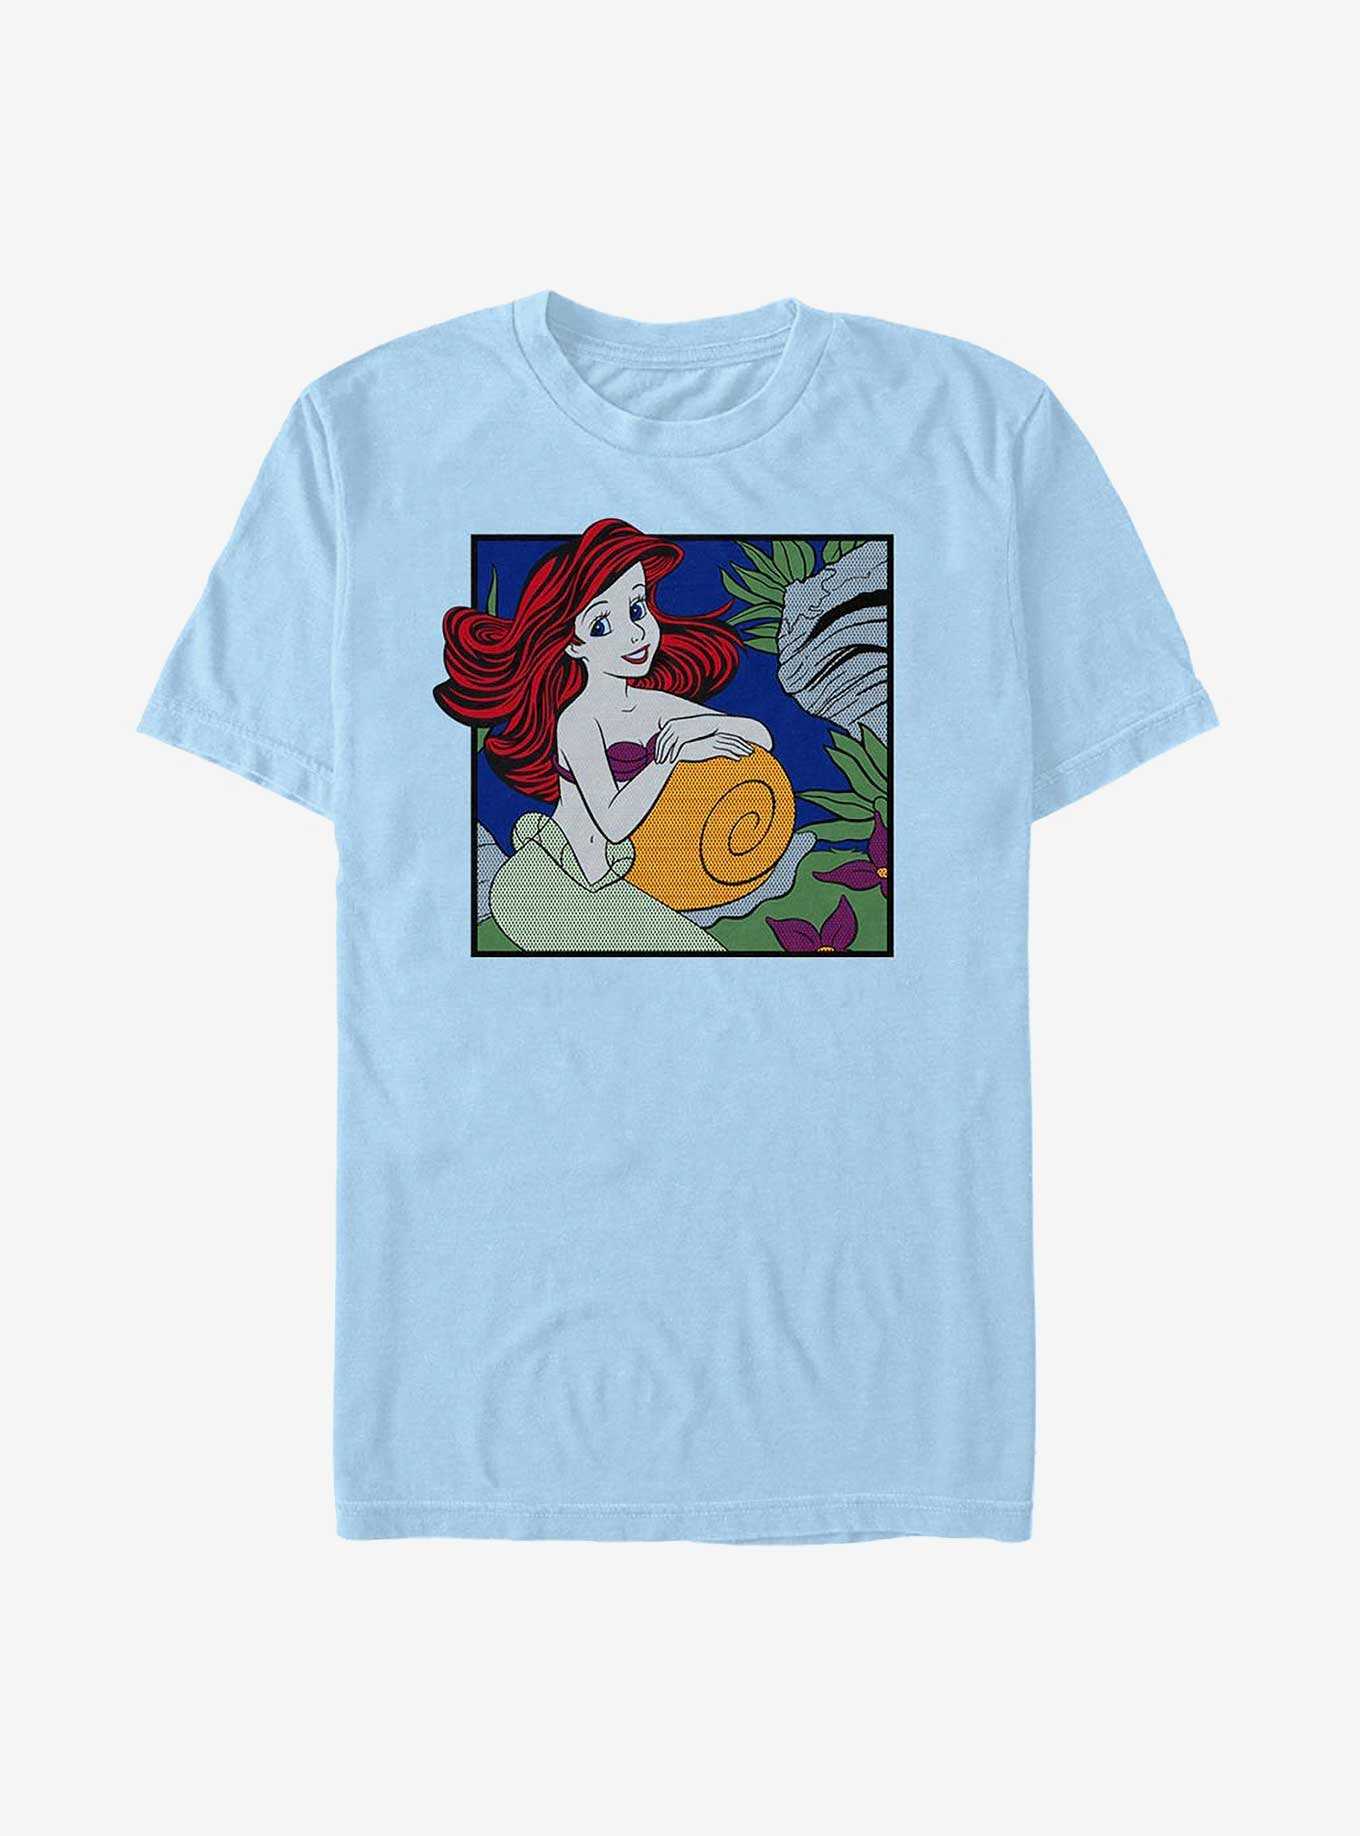 Disney The Little Mermaid Comic Box Ariel T-Shirt, , hi-res